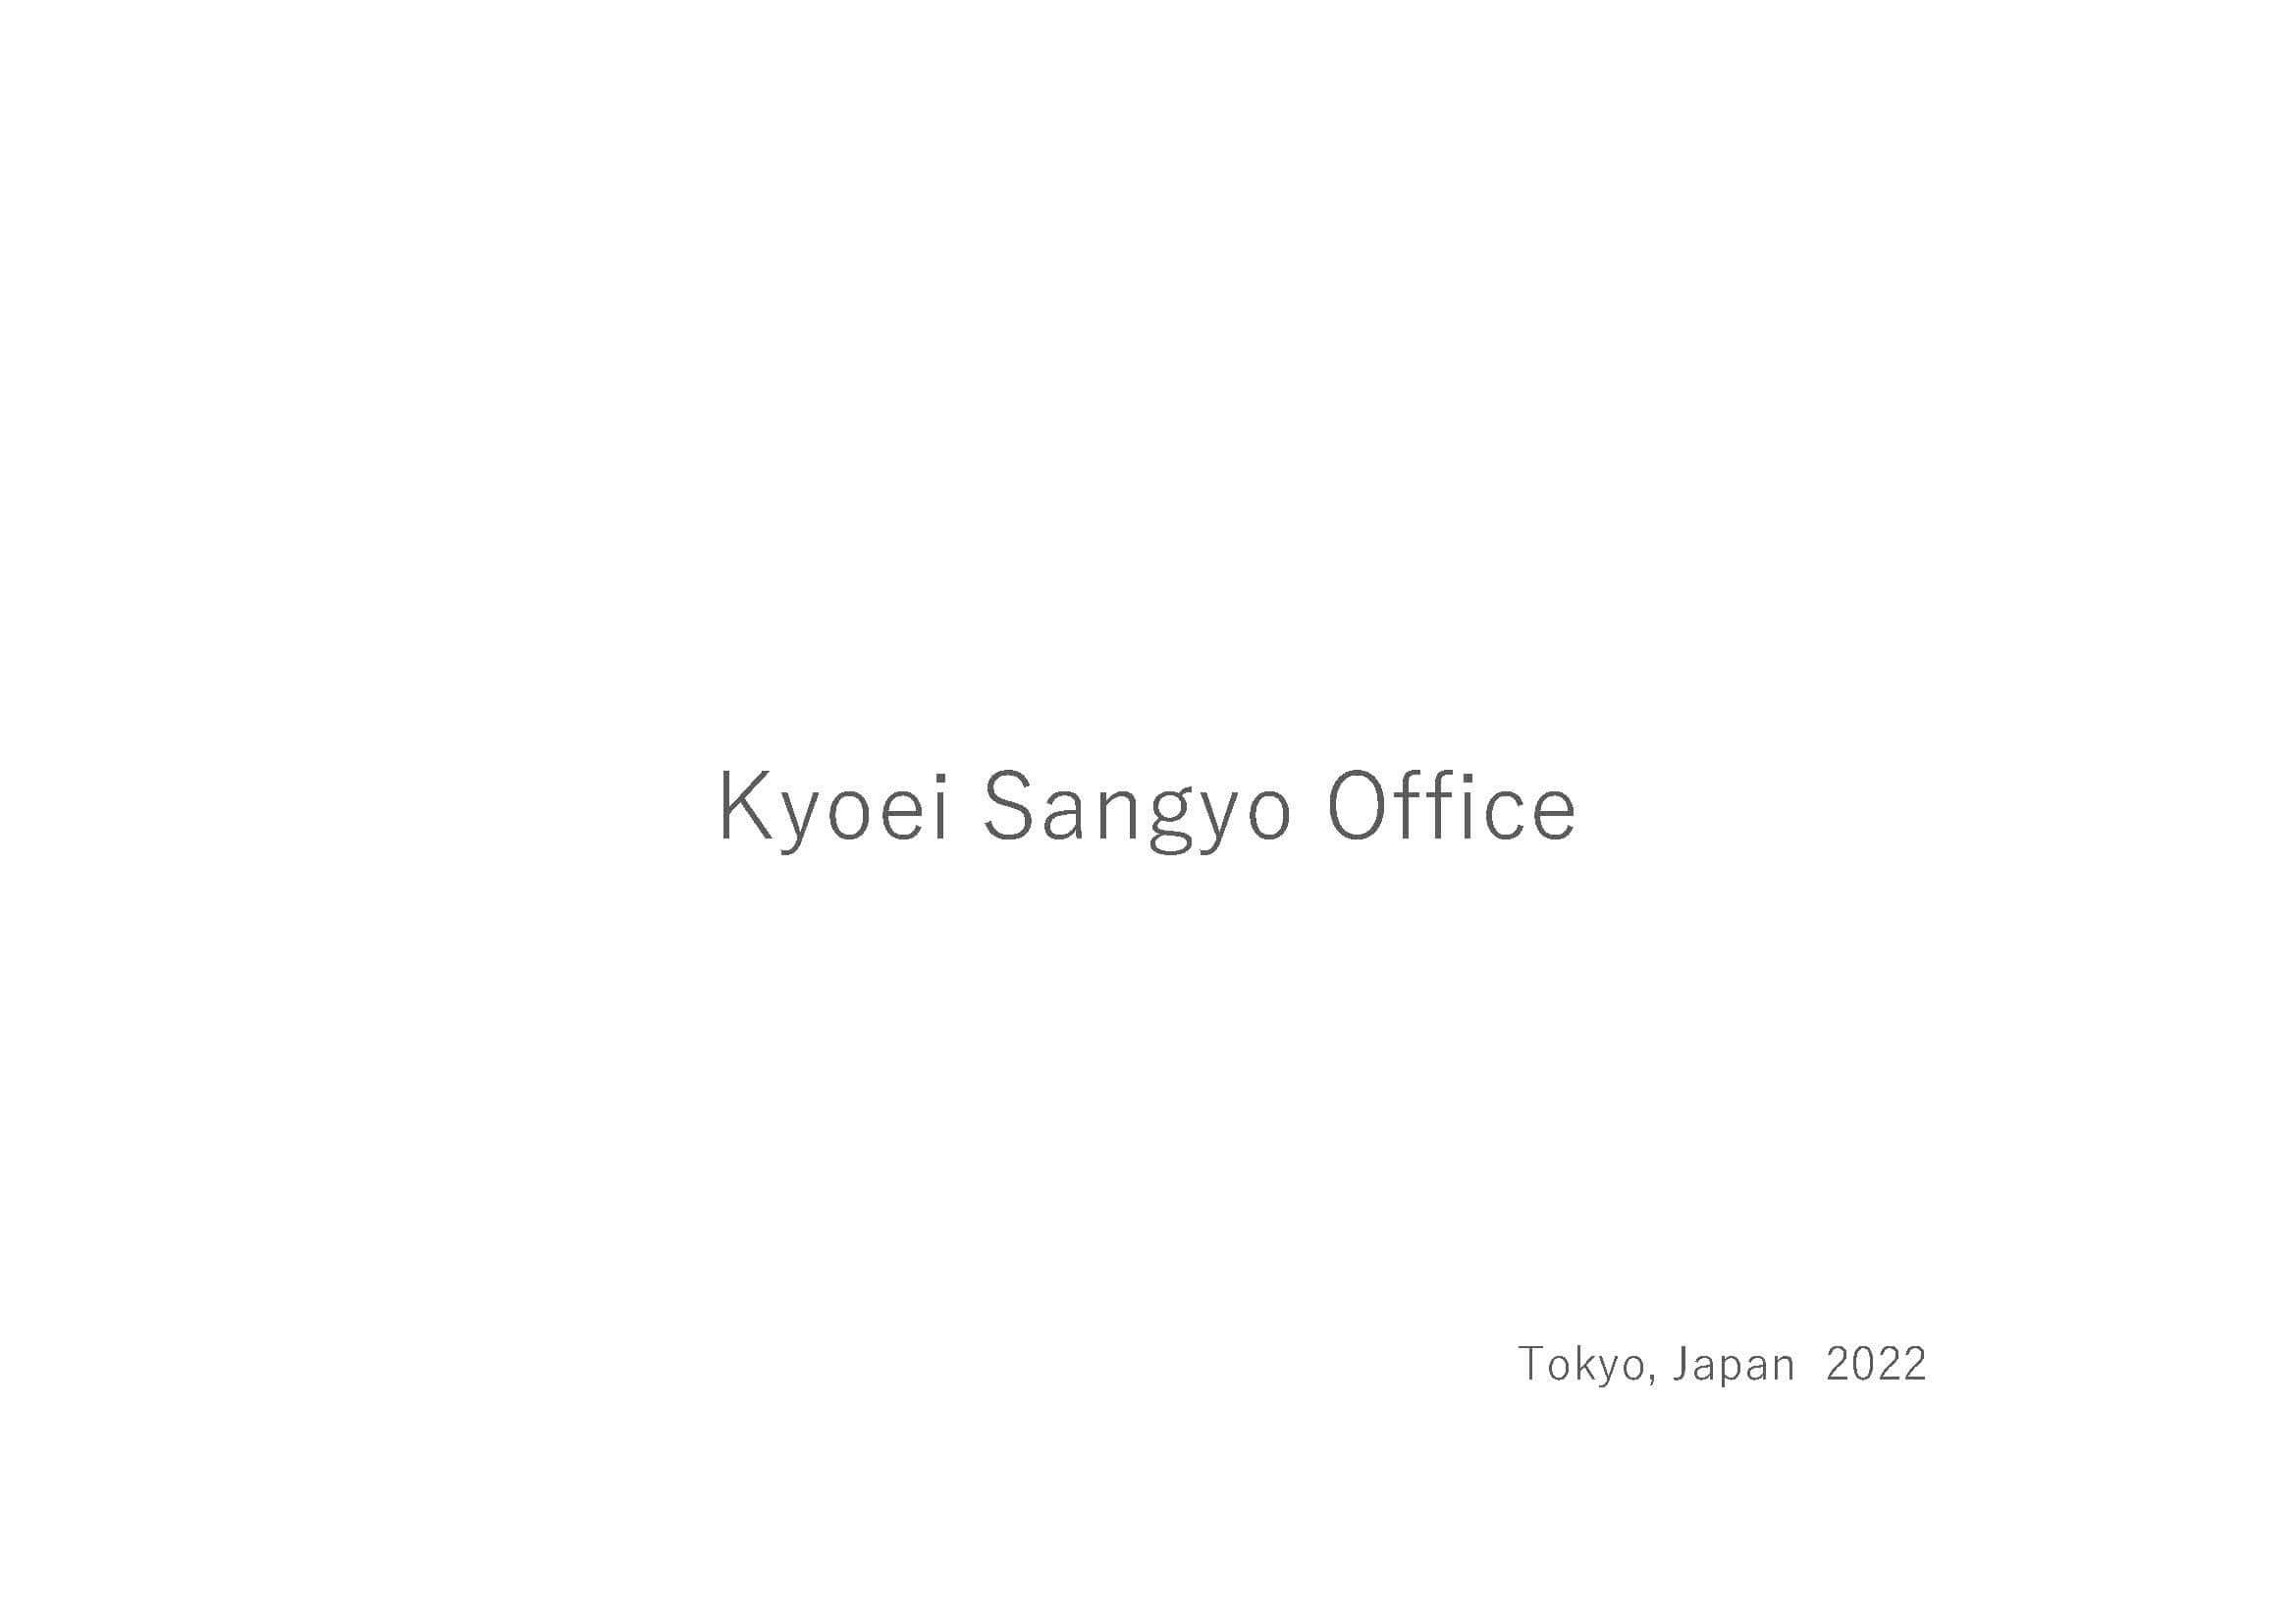 Kyoei Sangyo Office01